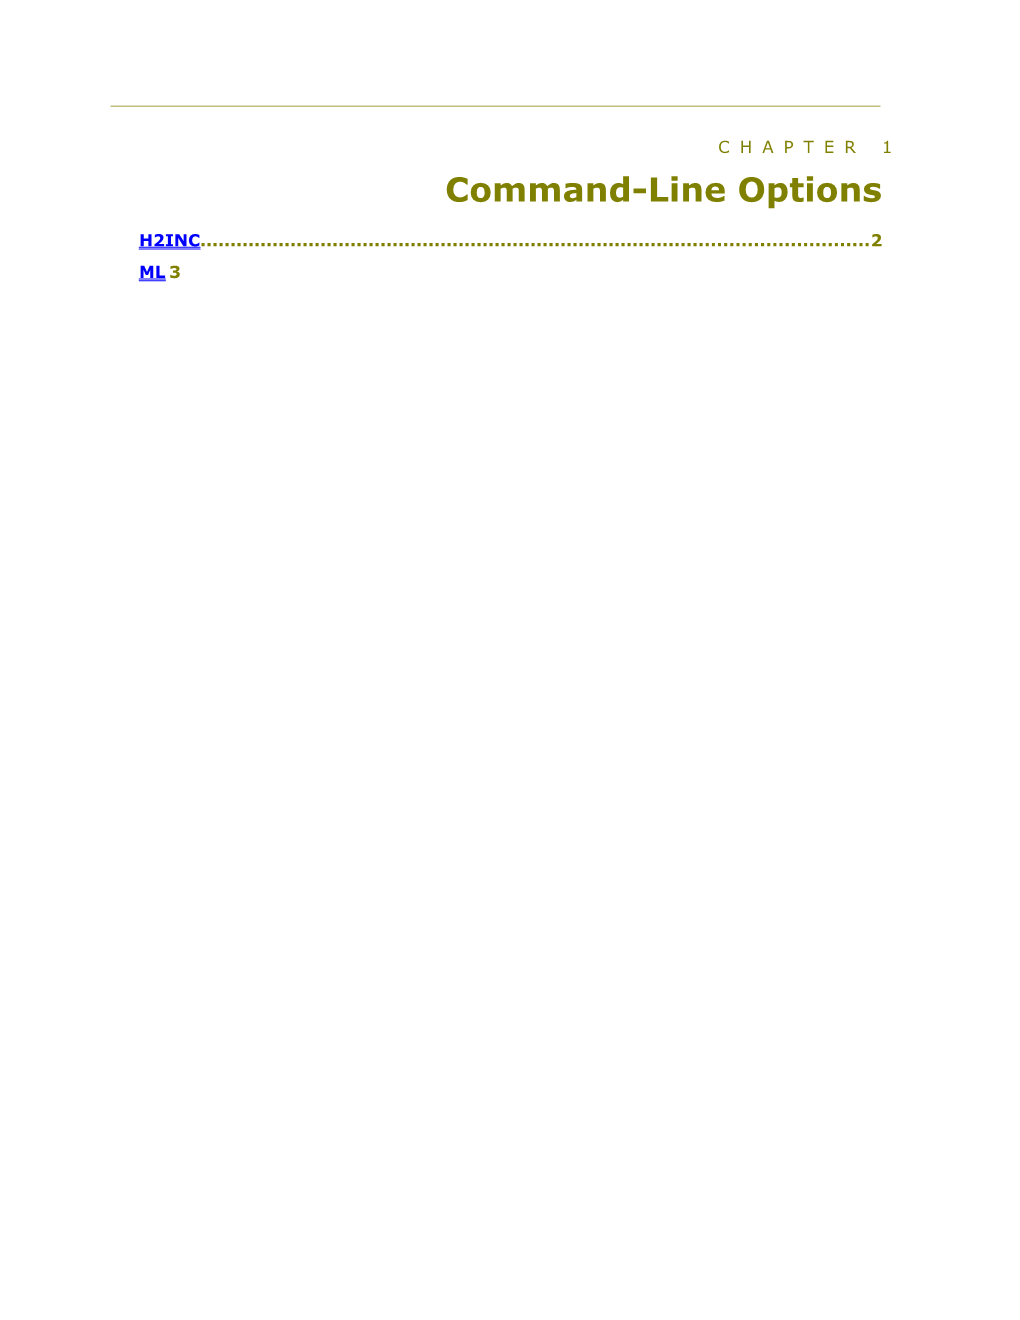 Command-Line Options